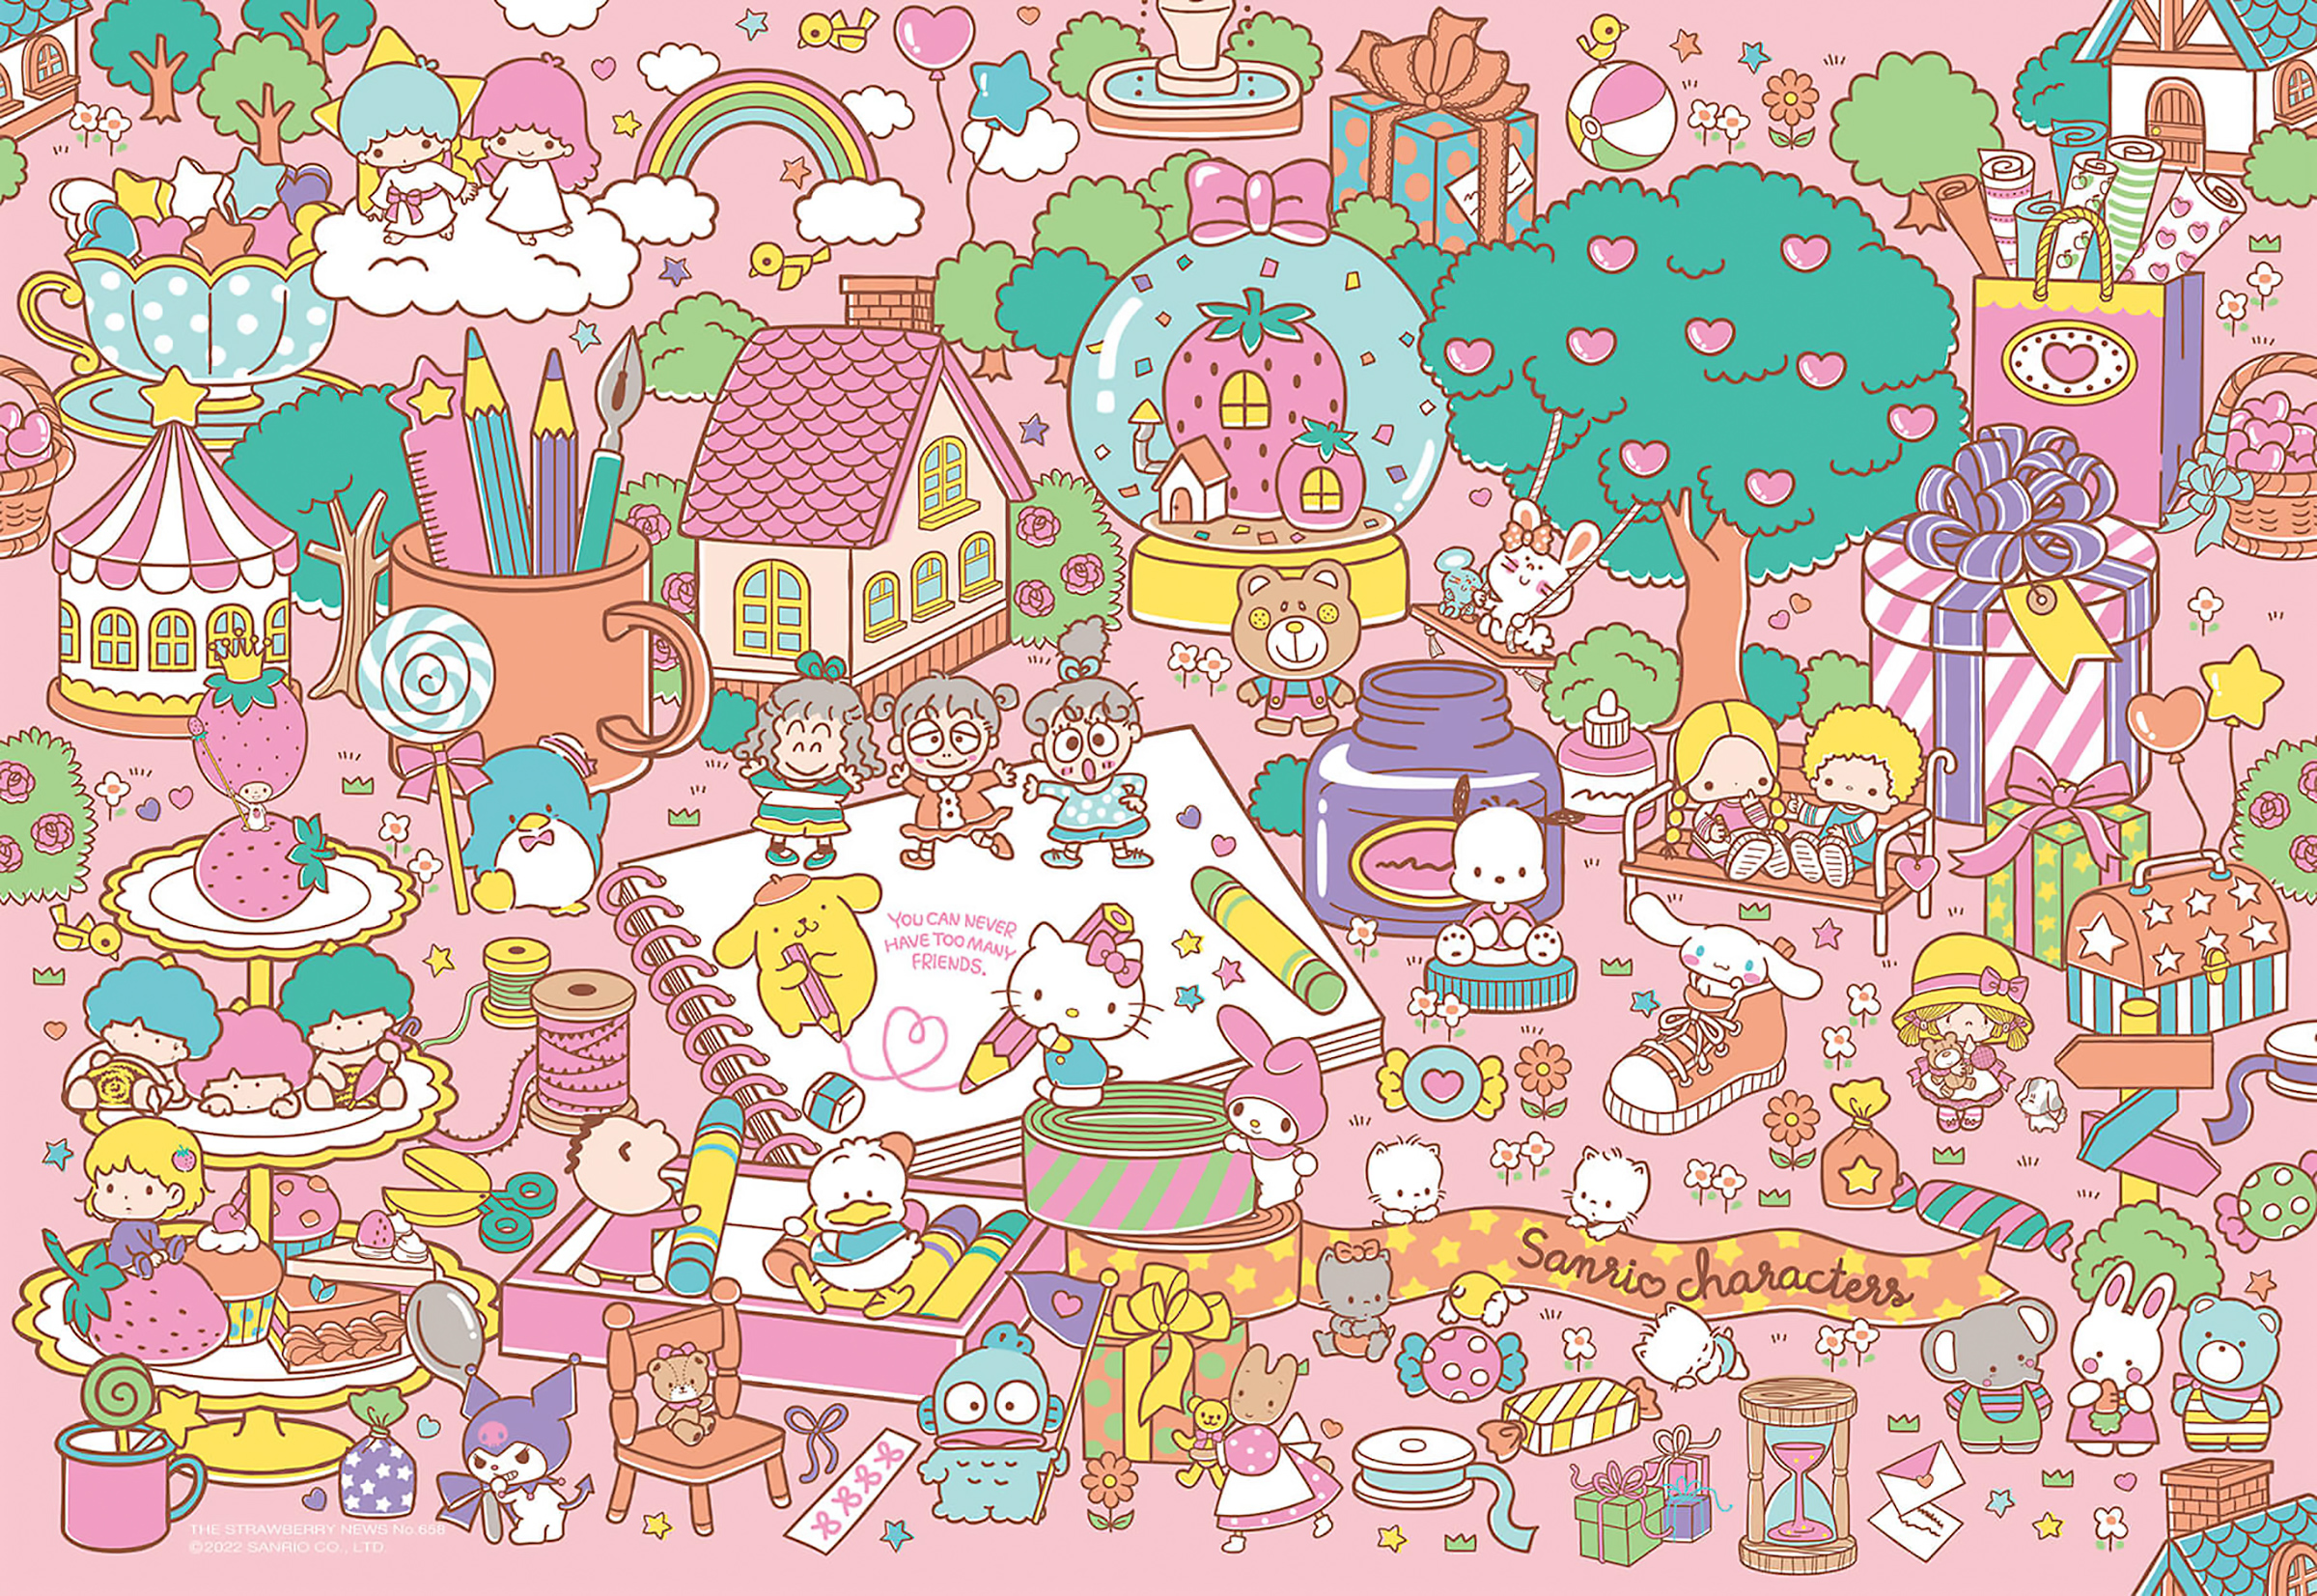 Sanrio Wallpaper 7.0 Free Download